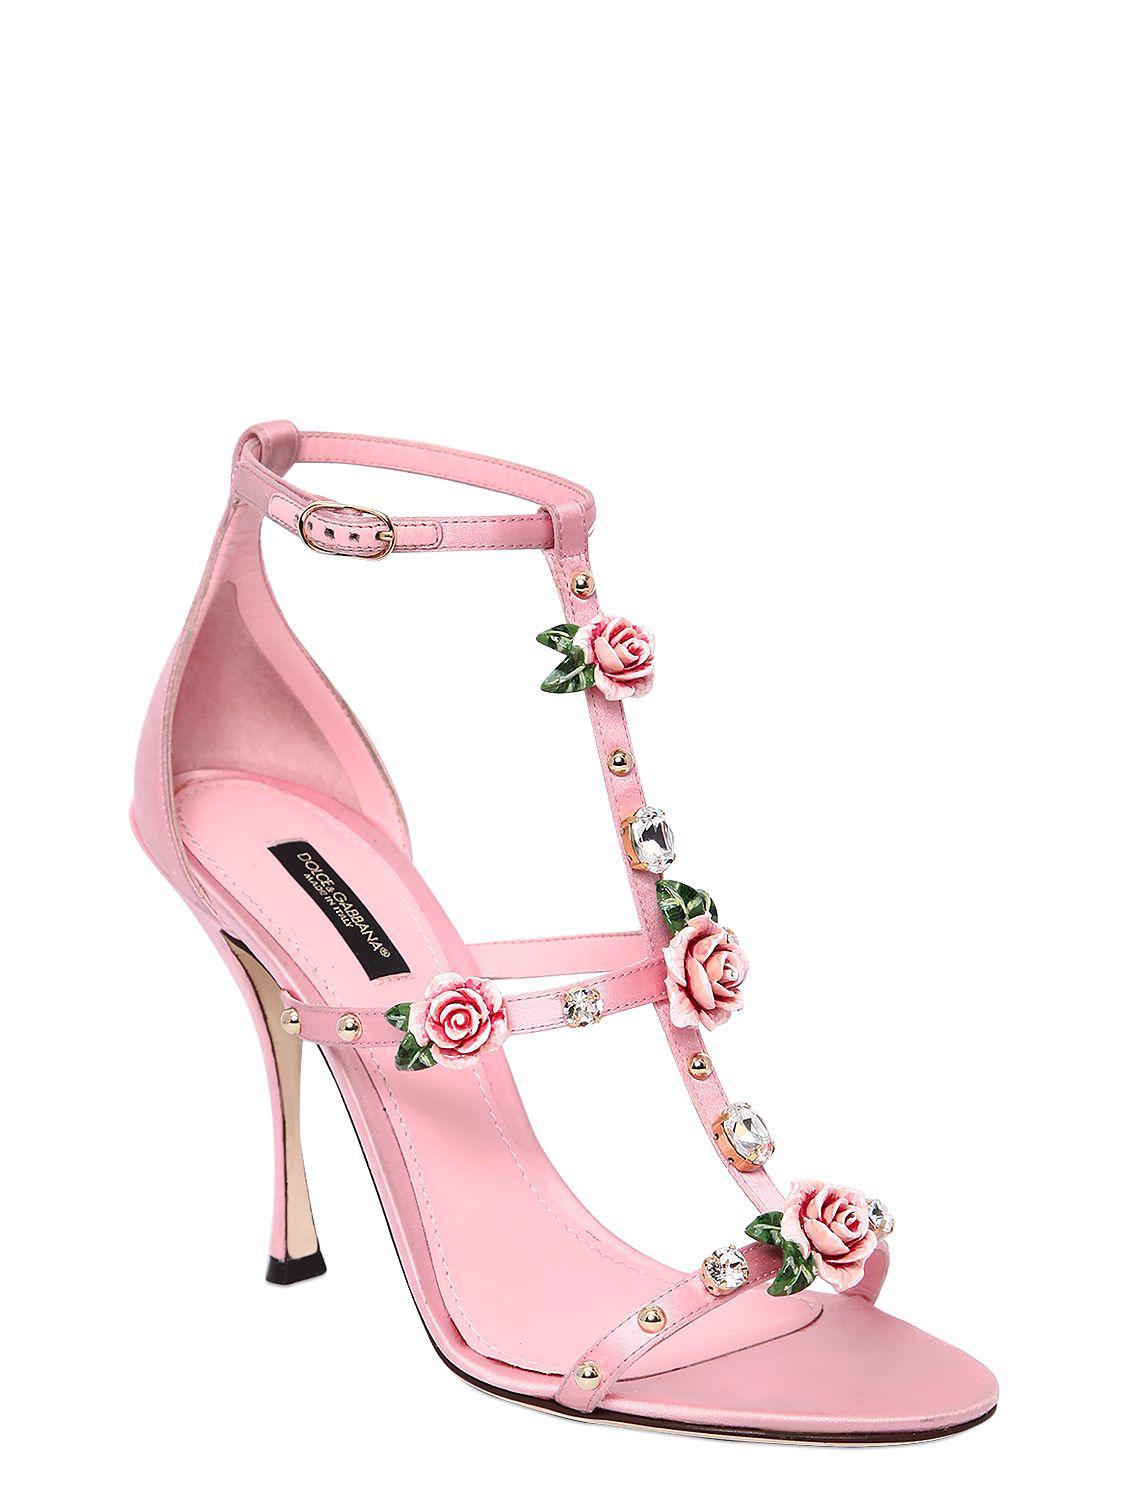 Lyst - Dolce & Gabbana 105mm Keira Embellished Satin Sandals in Pink